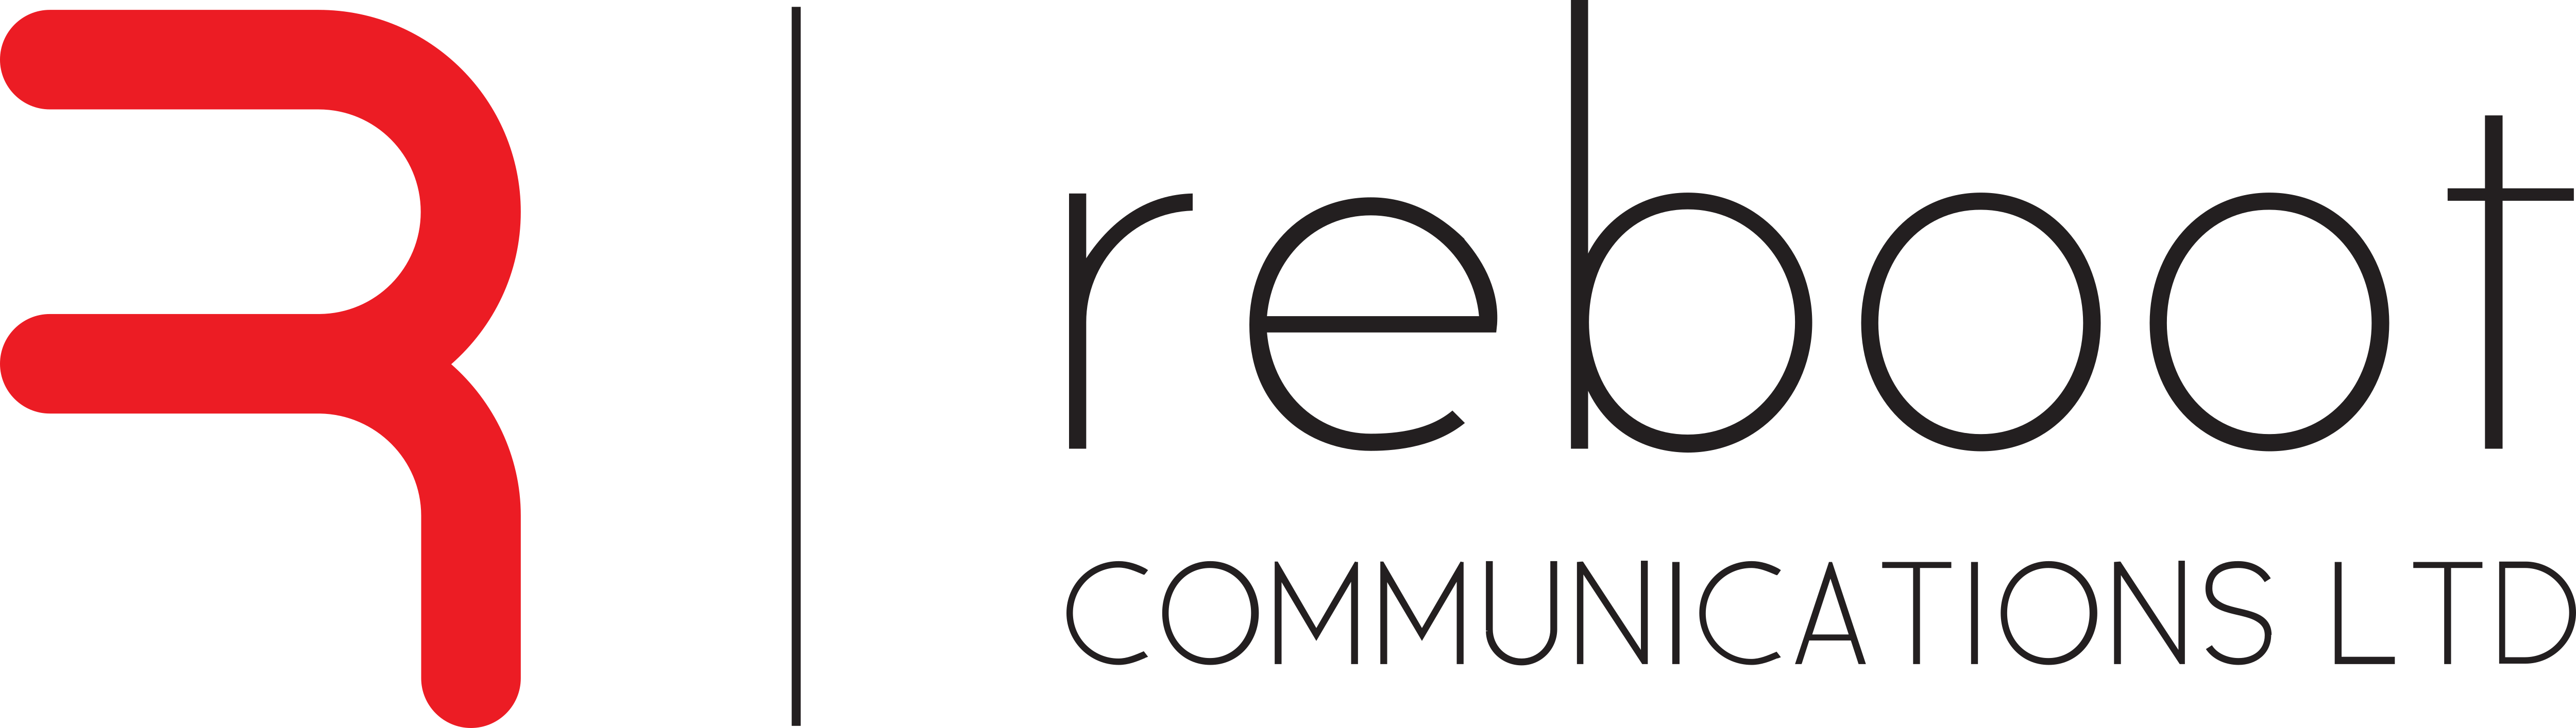 Reboot Communications Ltd - Logos Download